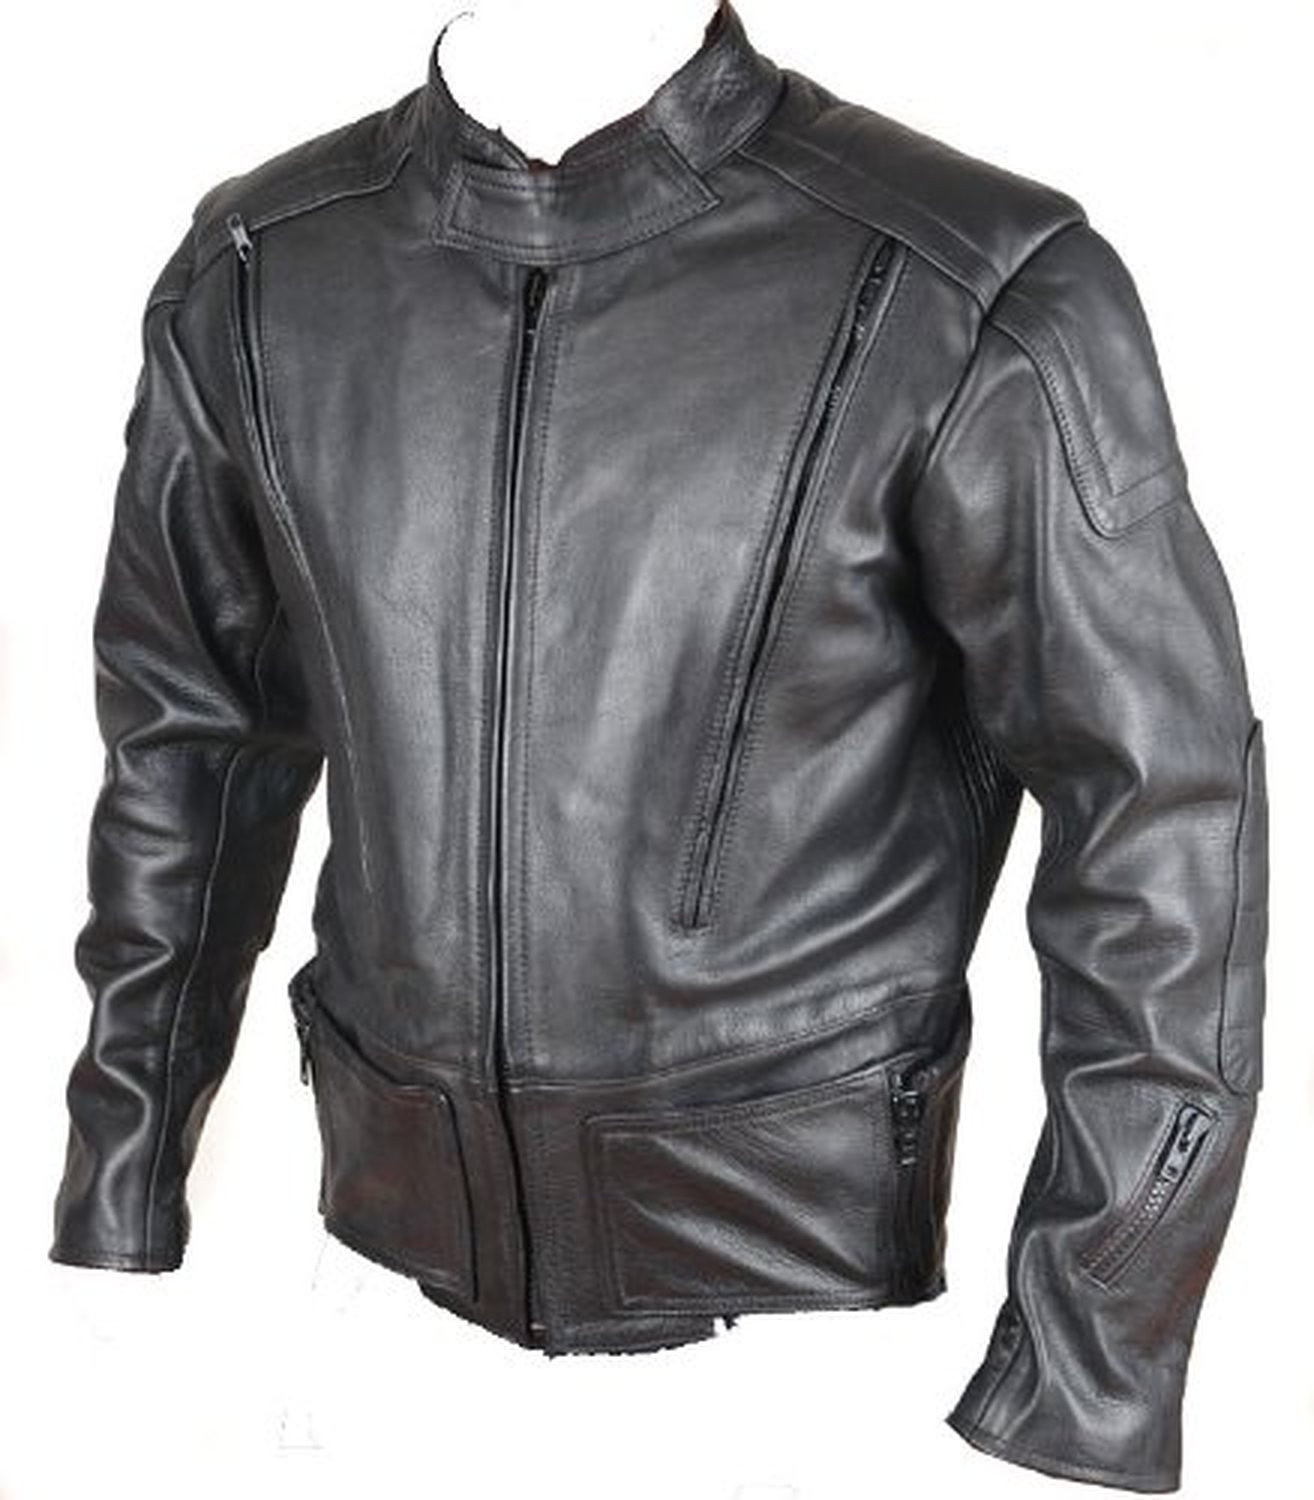 V-Pilot Motorcycle Leather Jacket